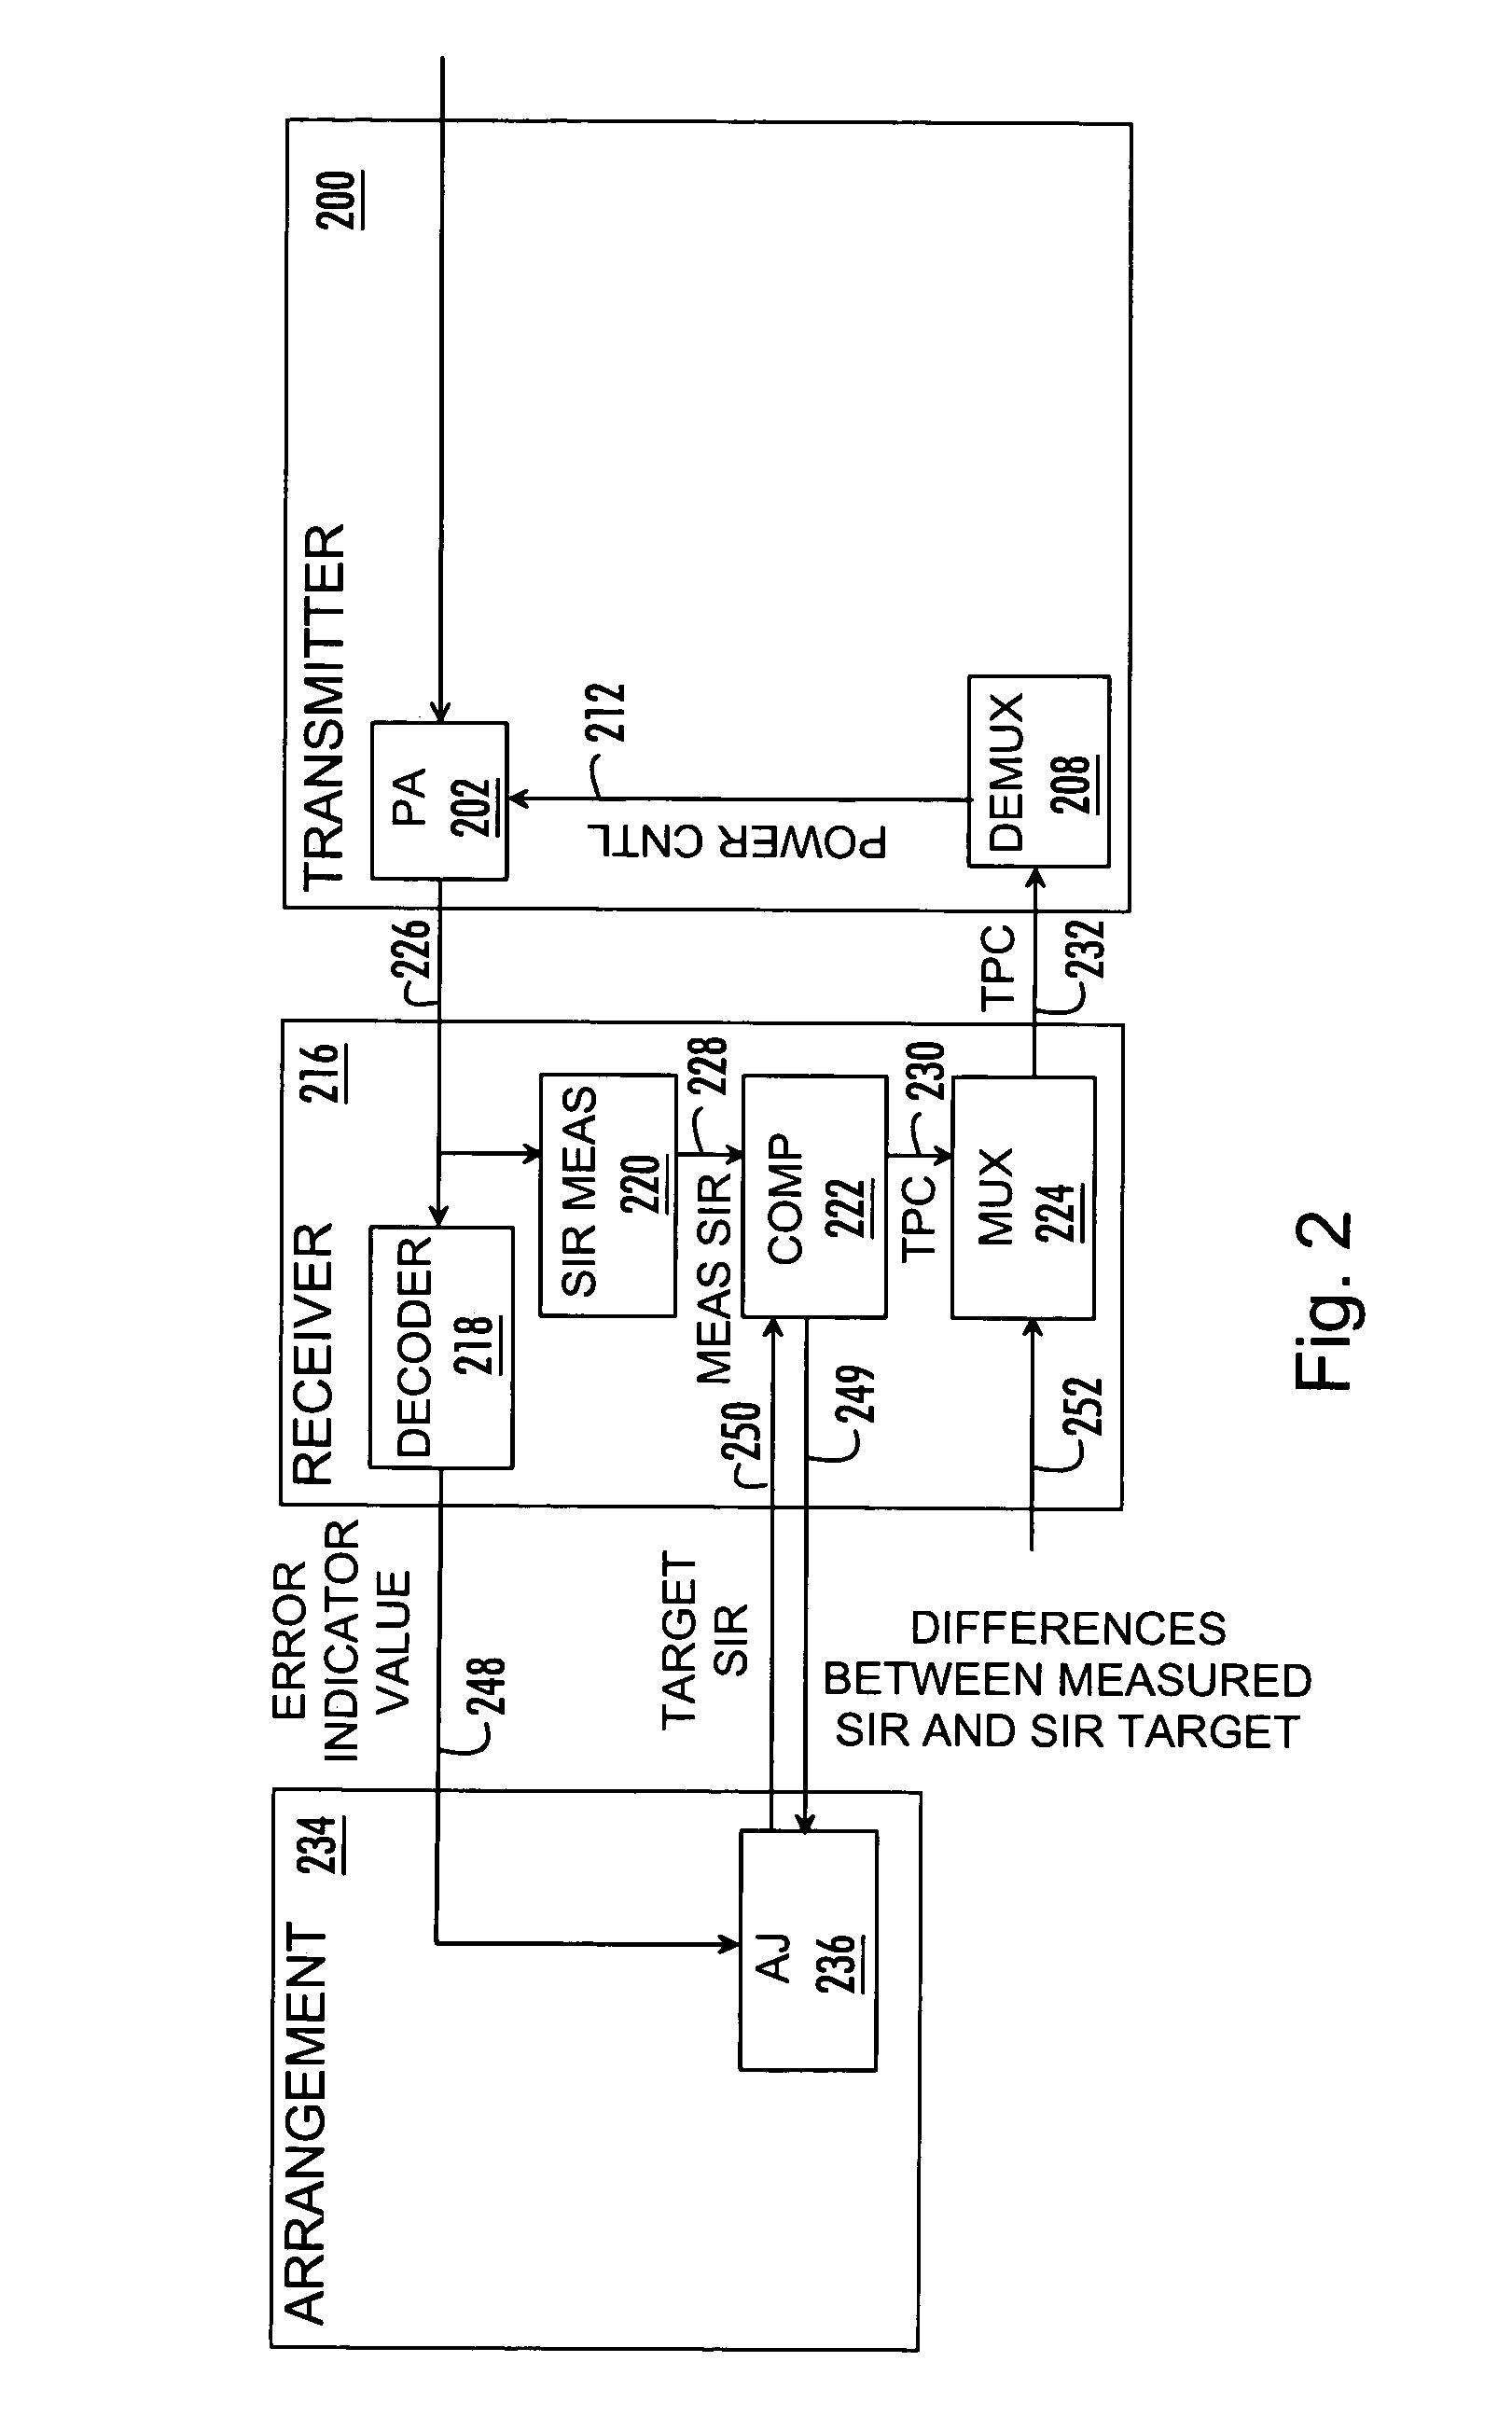 Transmit power control method and radio arrangement